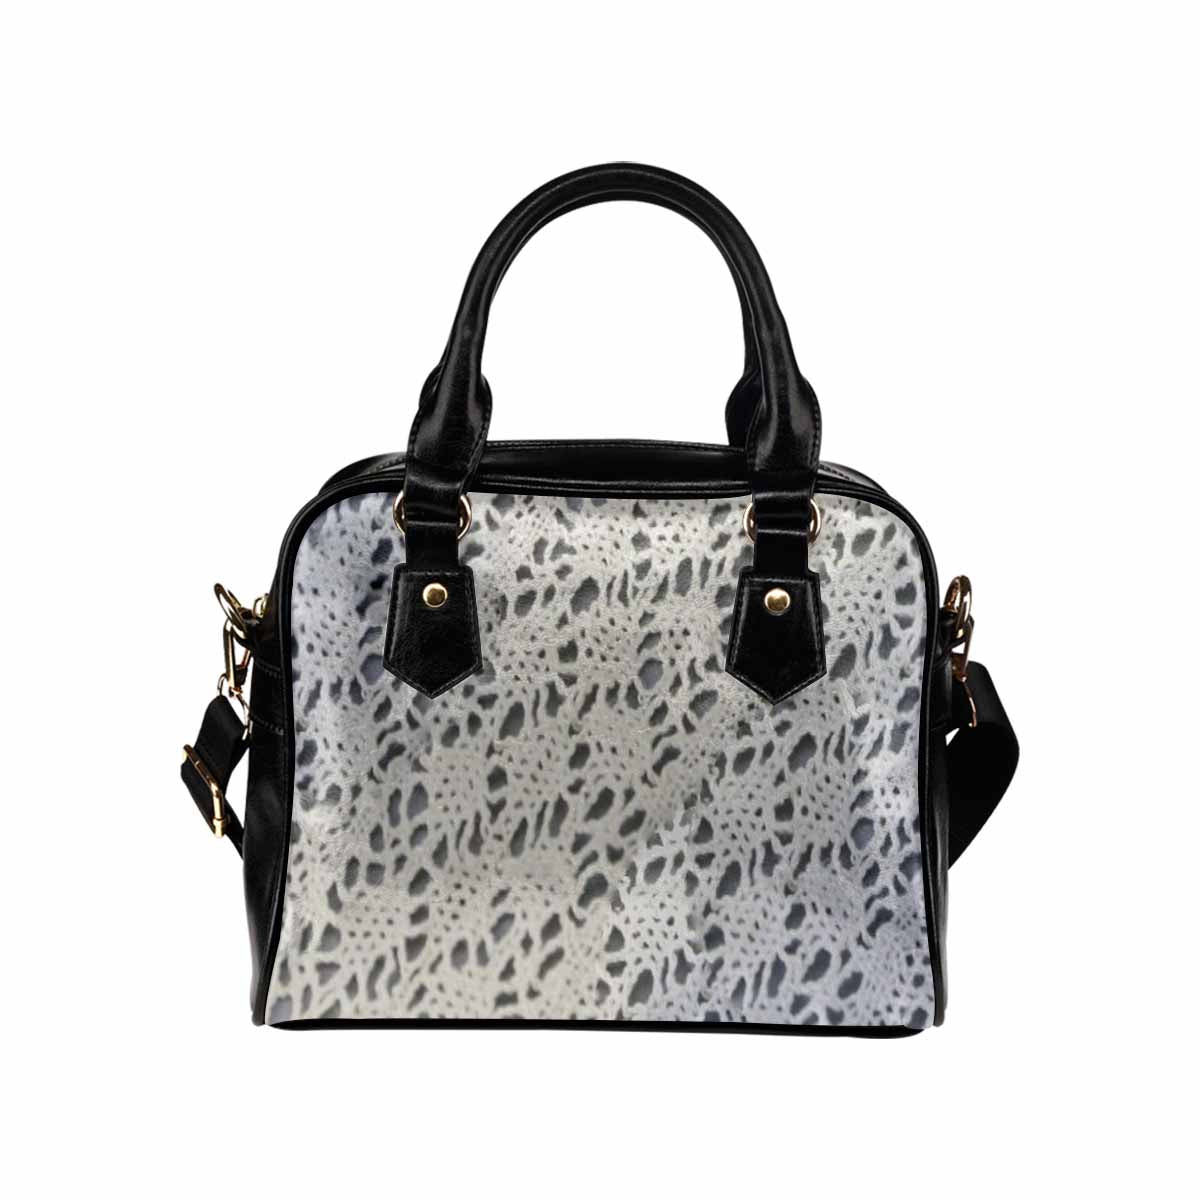 Victorian lace print, cute handbag, Mod 19163453, design 12